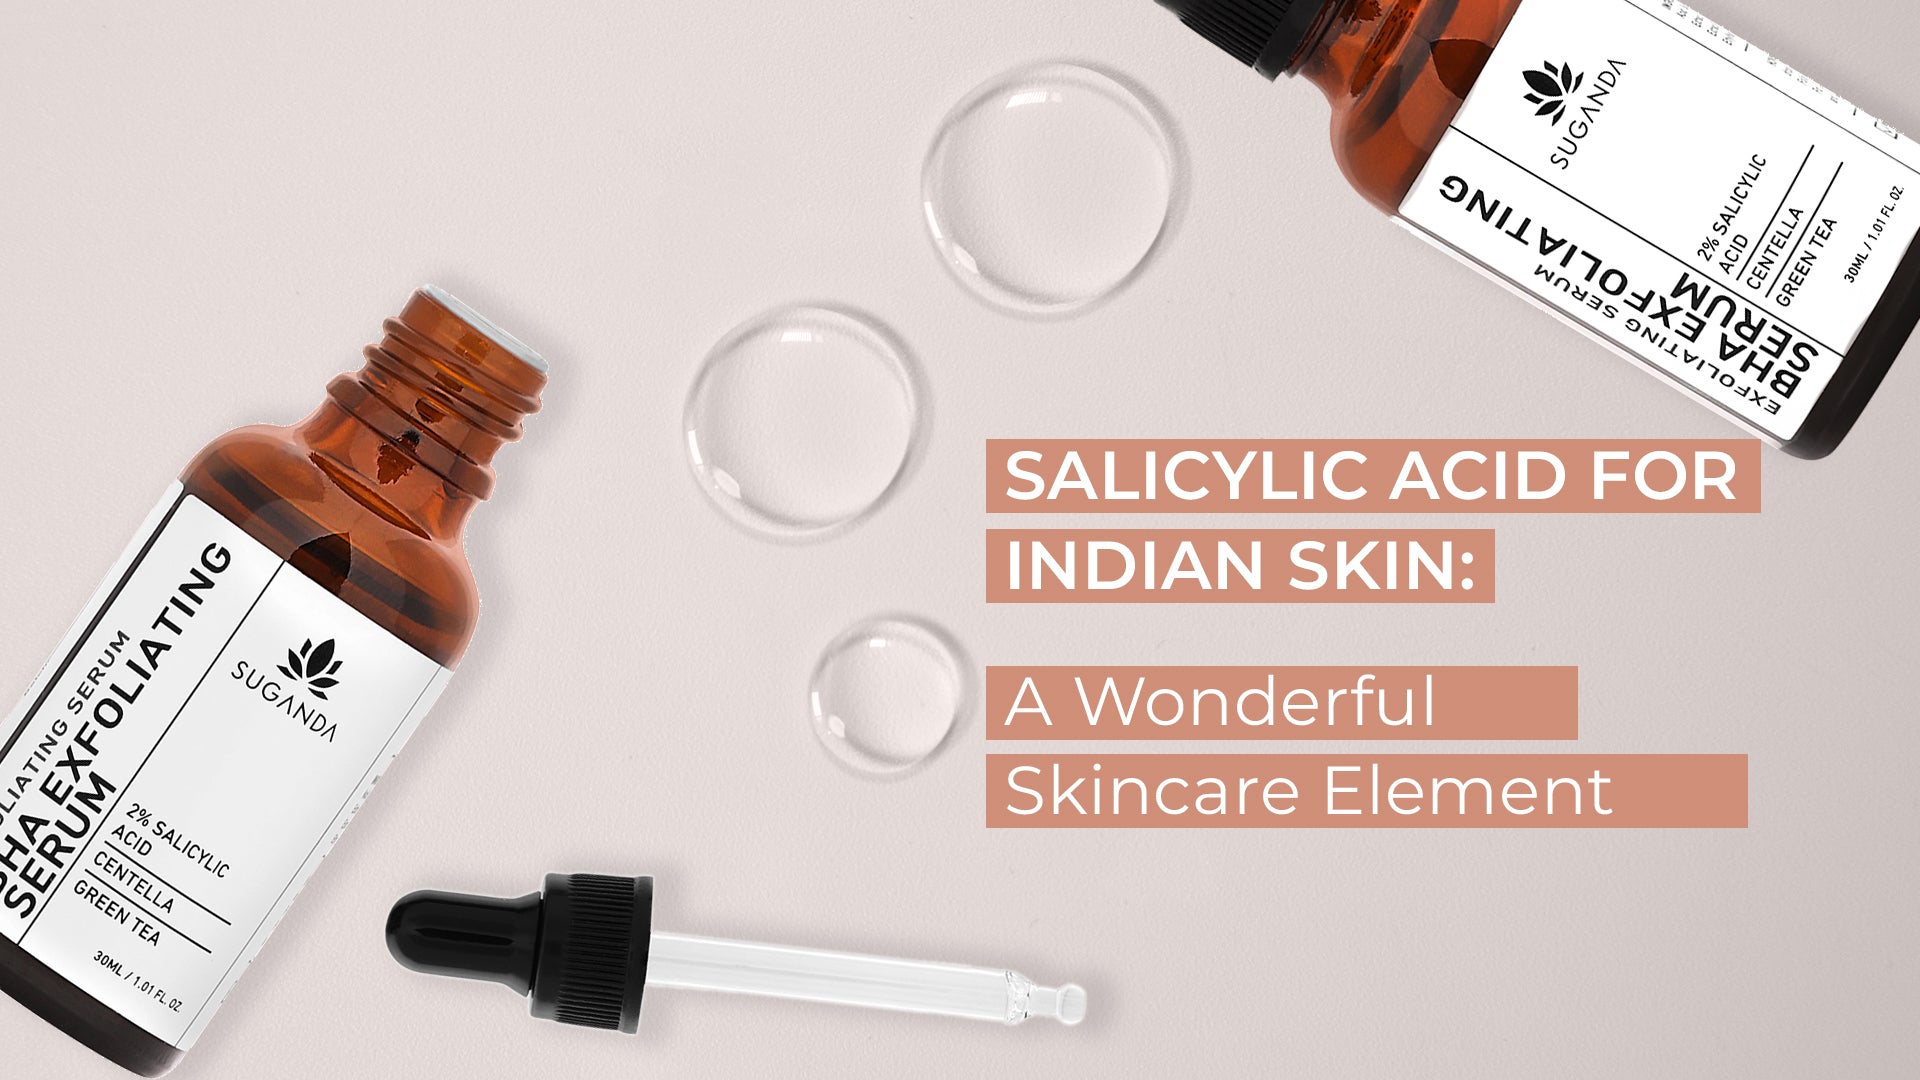 Salicylic acid for Indian skin: a wonderful skincare element